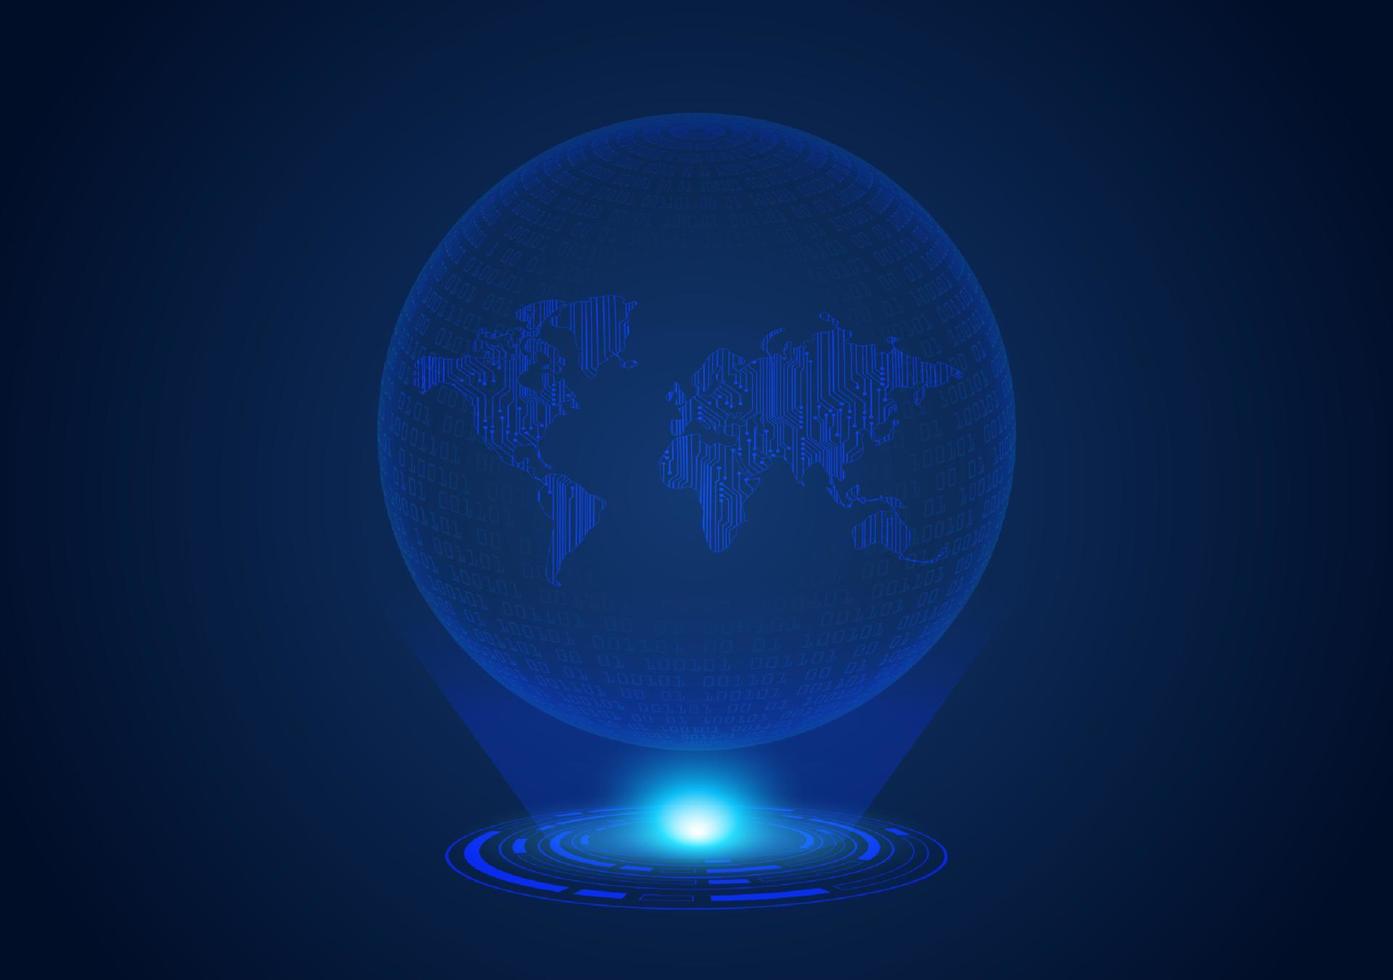 globe holographique moderne bleu vecteur